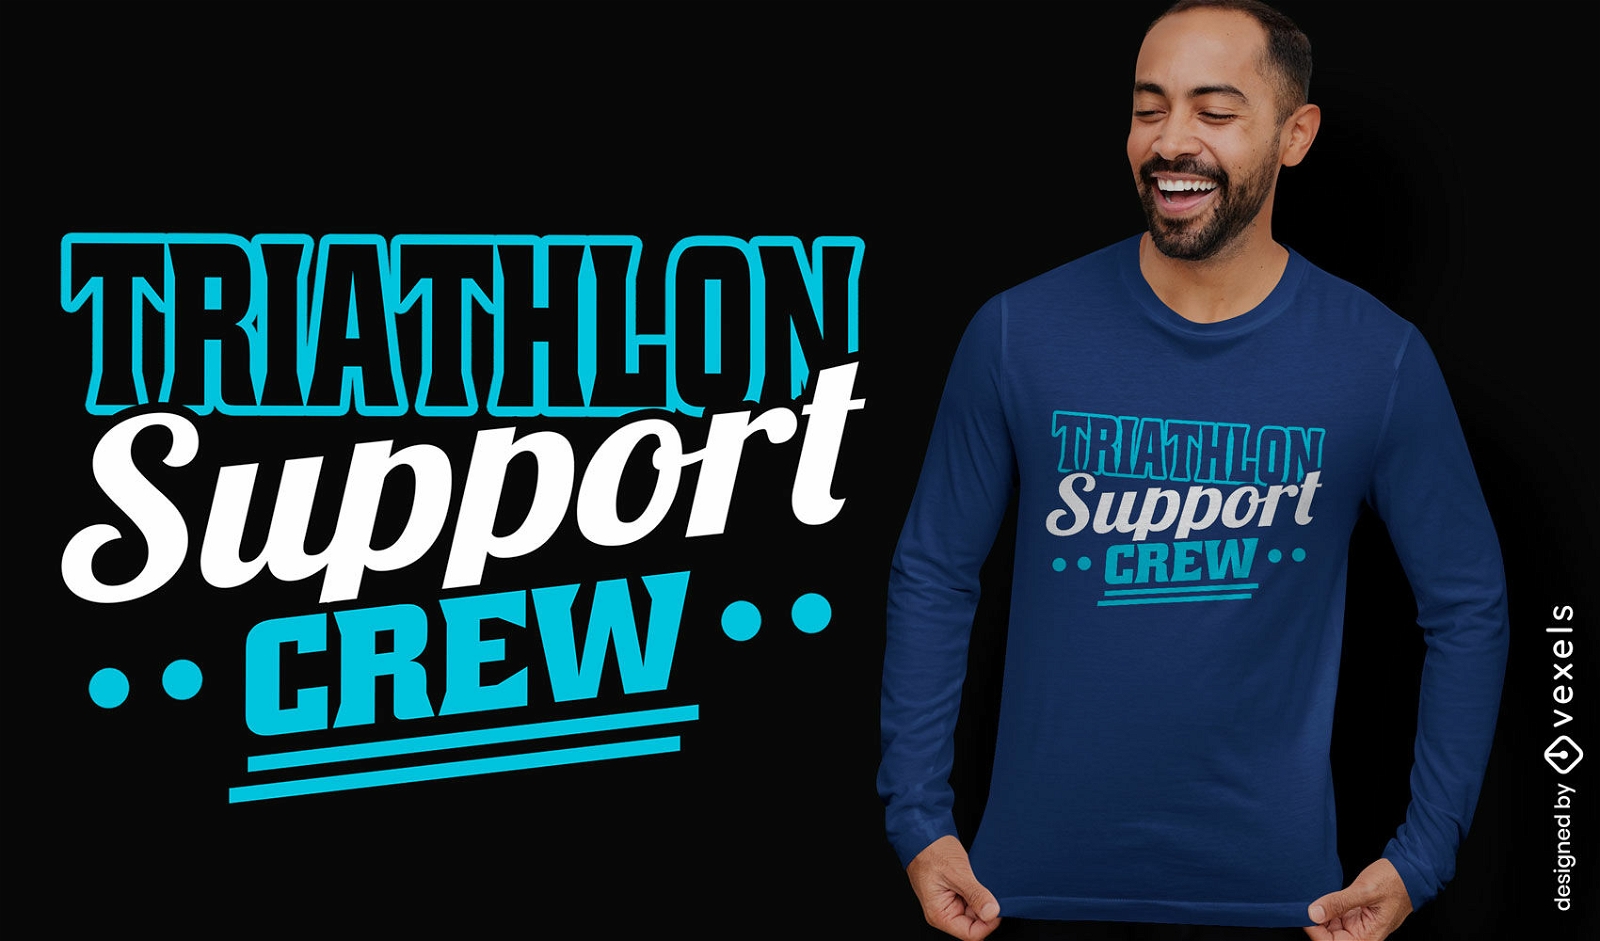 Triathlon support crew t-shirt design